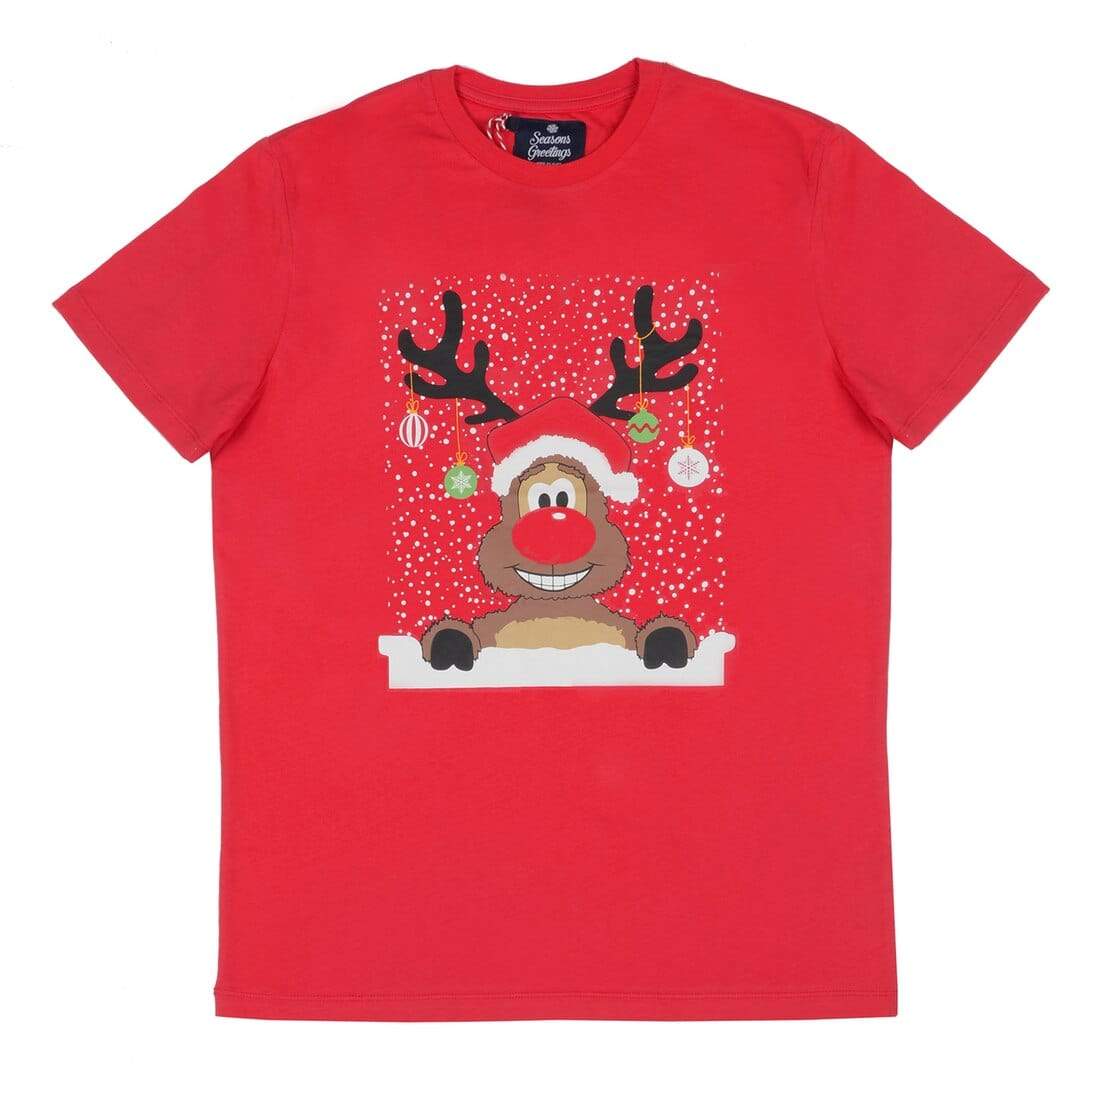 Mr Crimbo Mens Crew Red Reindeer Bauble Christmas T-Shirt - MrCrimbo.co.uk -VISMW06034RED_A - S -cute tshirt